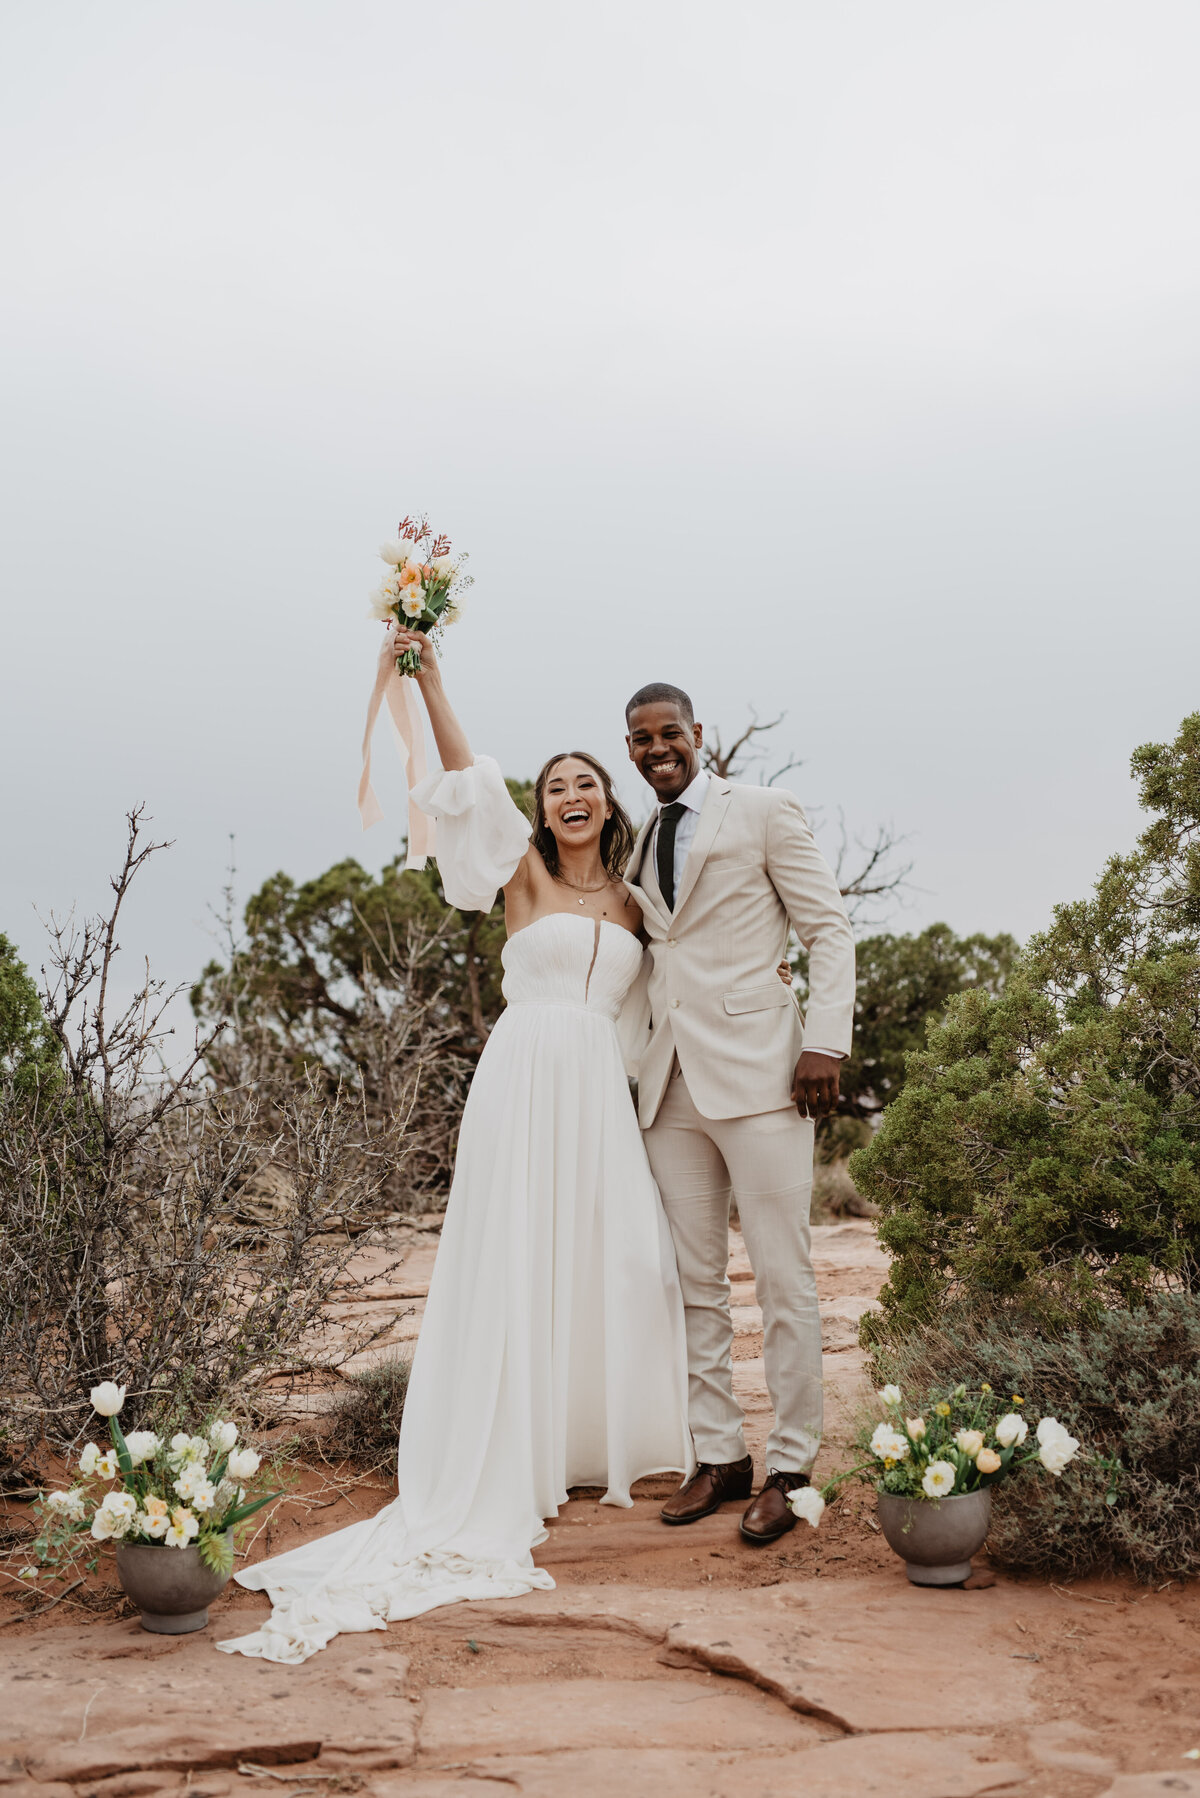 Utah Elopement Photographer captures bride holding bouquet